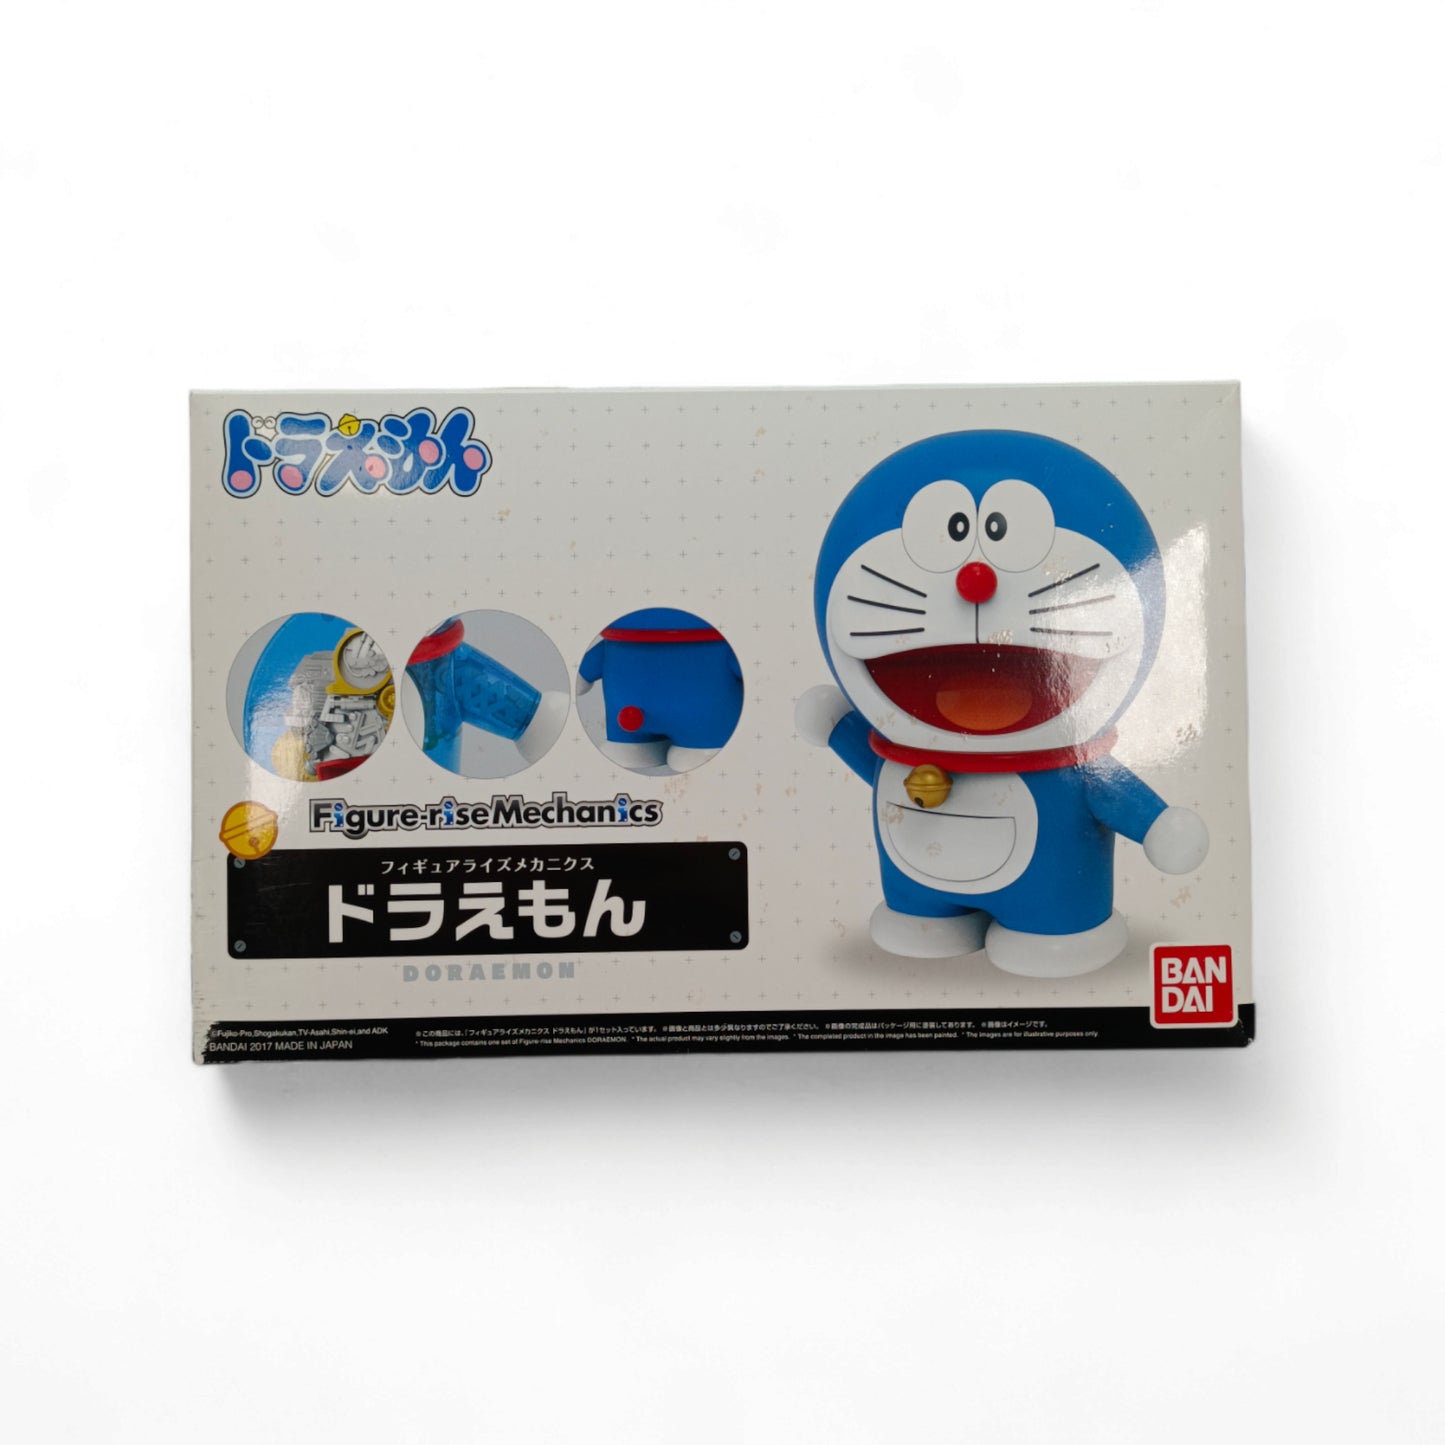 Doraemon Figurise Mechanics - Bandai